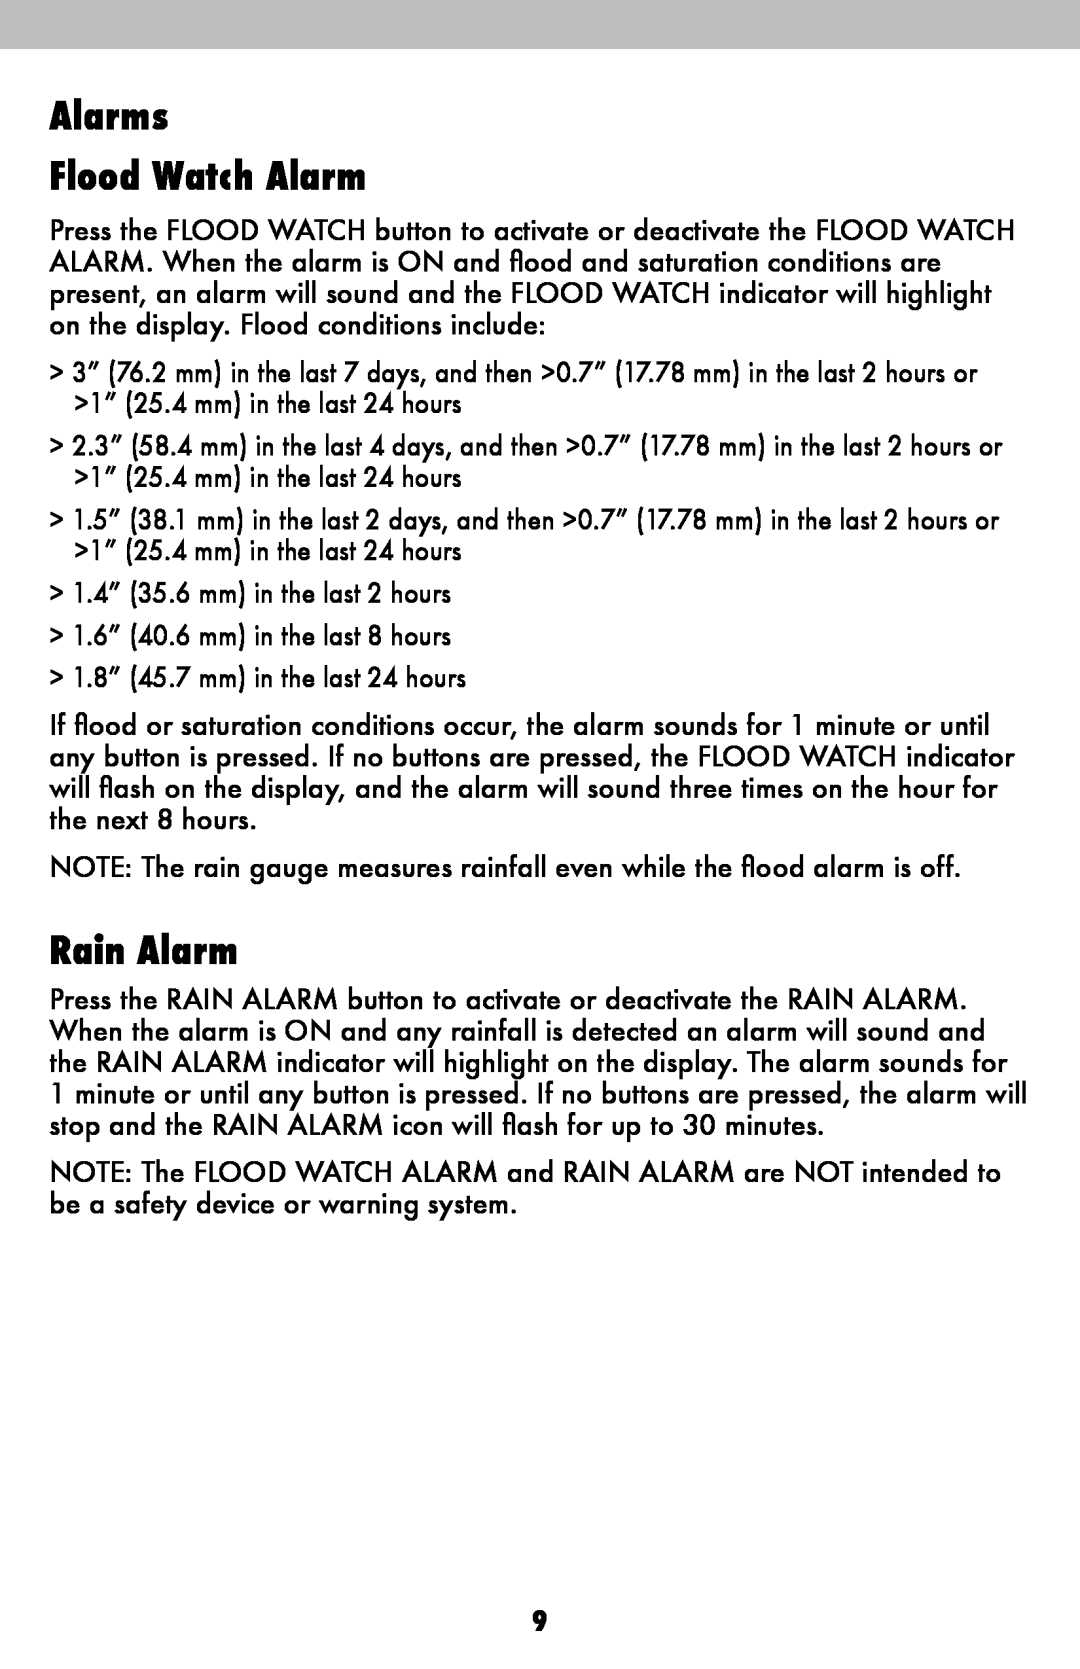 Acu-Rite 875 instruction manual Alarms Flood Watch Alarm, Rain Alarm 